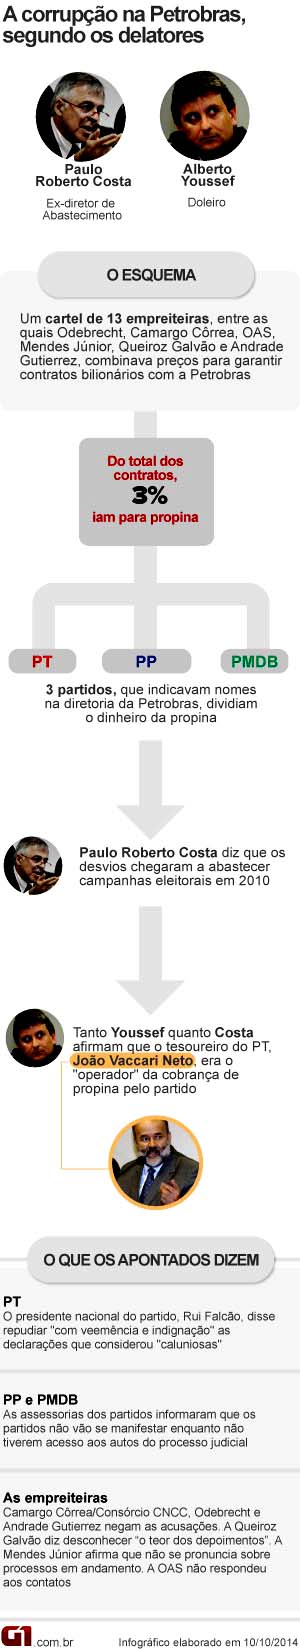 O Globo G1 - 29/10/14 - Petrobras: Corrupo segundo delatores